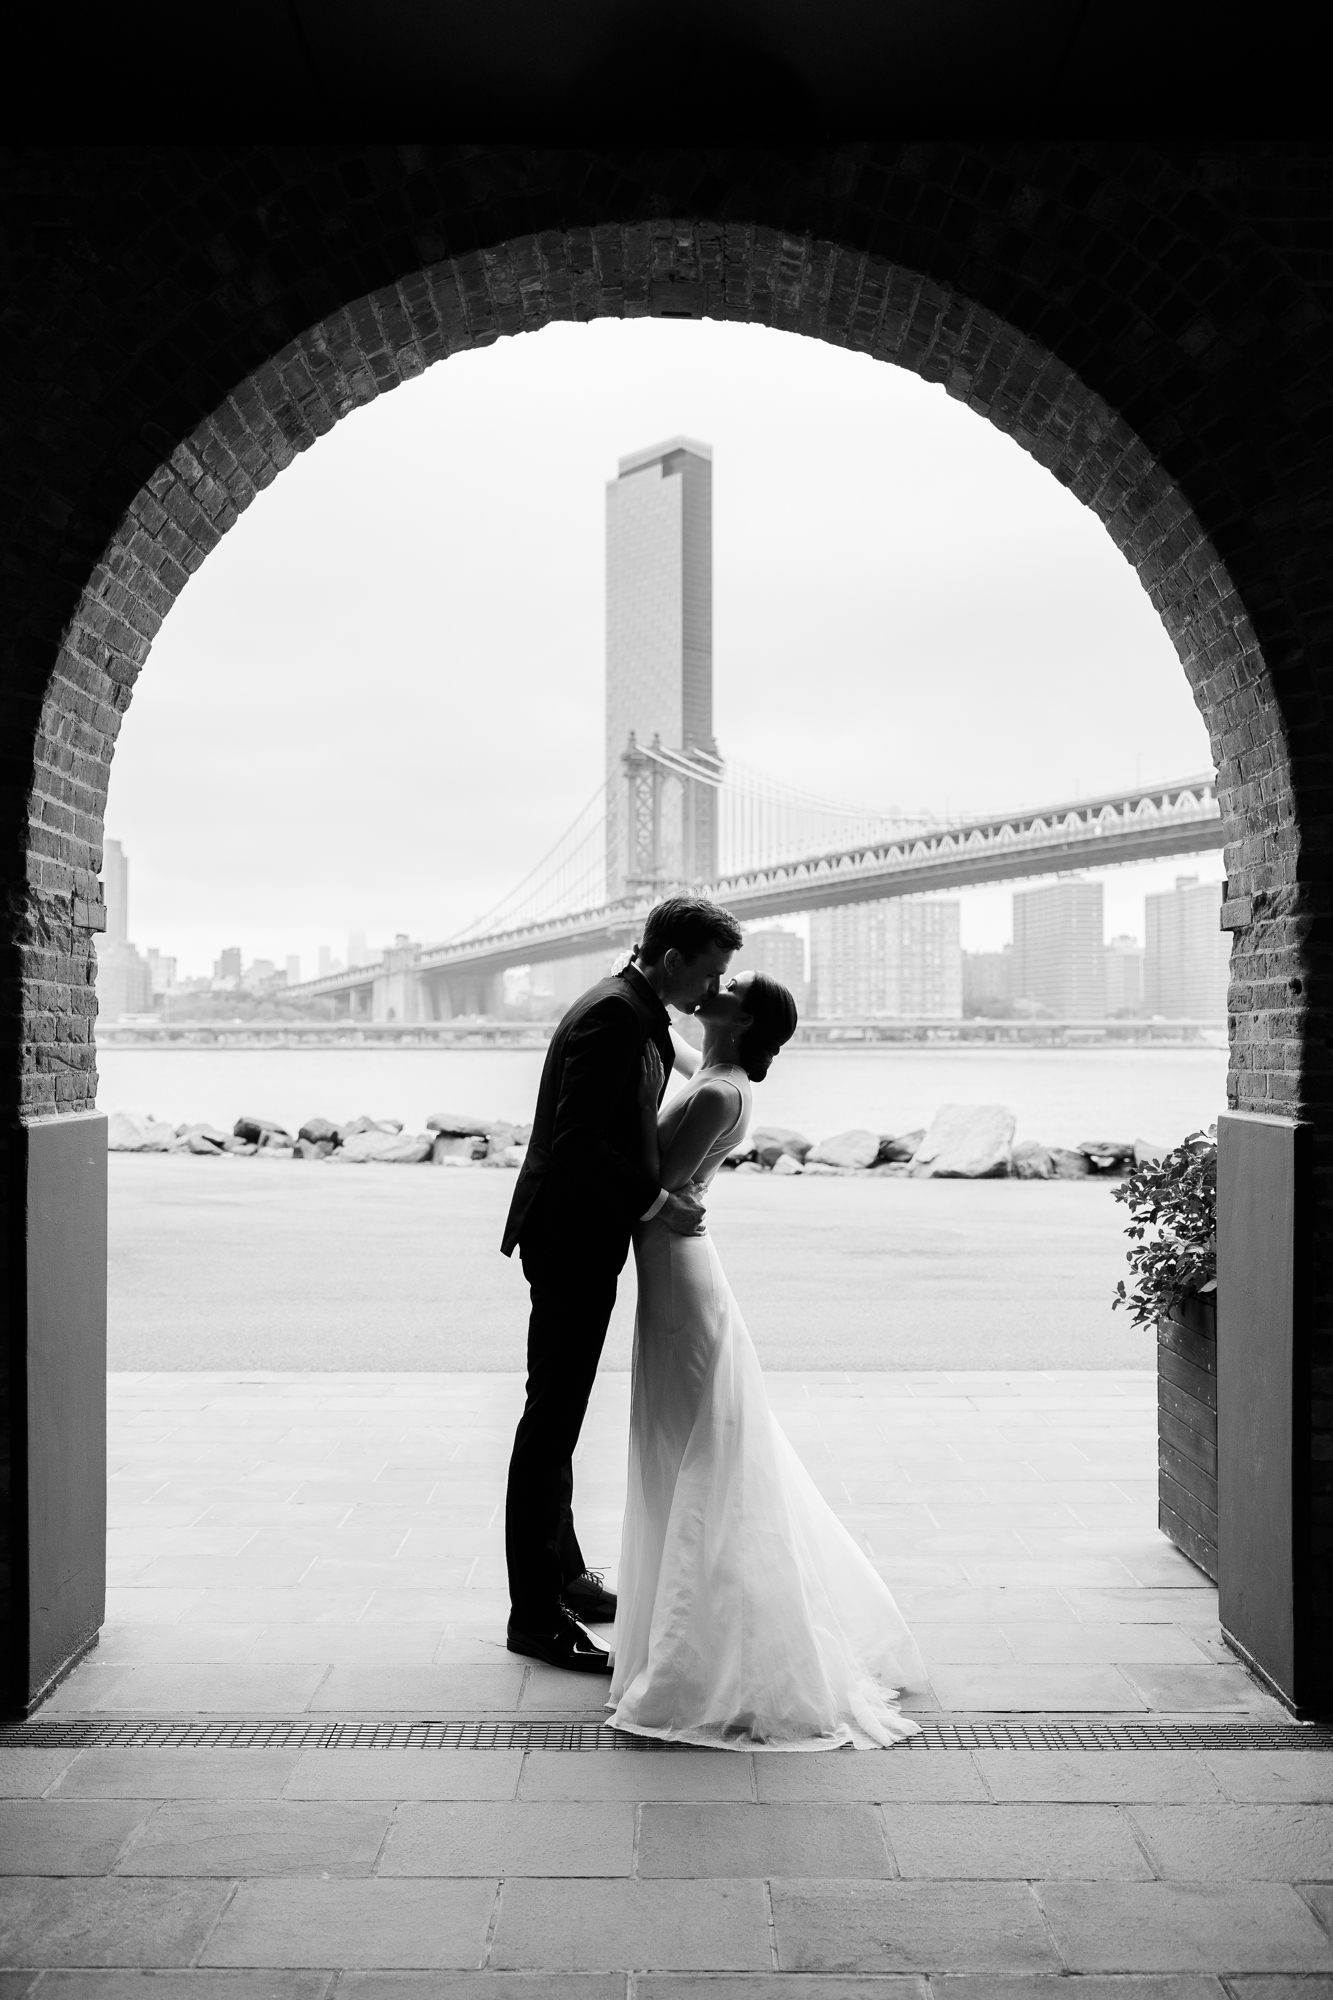 Experienced NYC Wedding Photographers